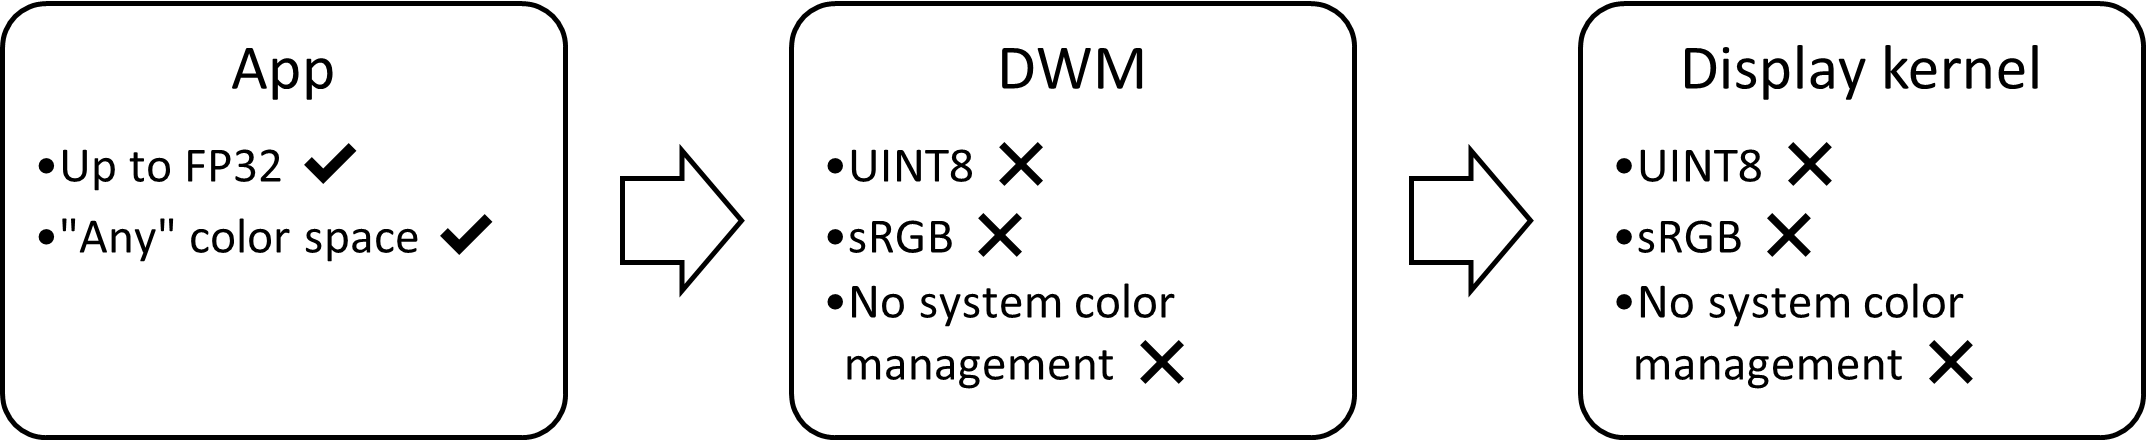 SDR 显示堆栈的框图：限制为 sRGB，8 位，无颜色管理